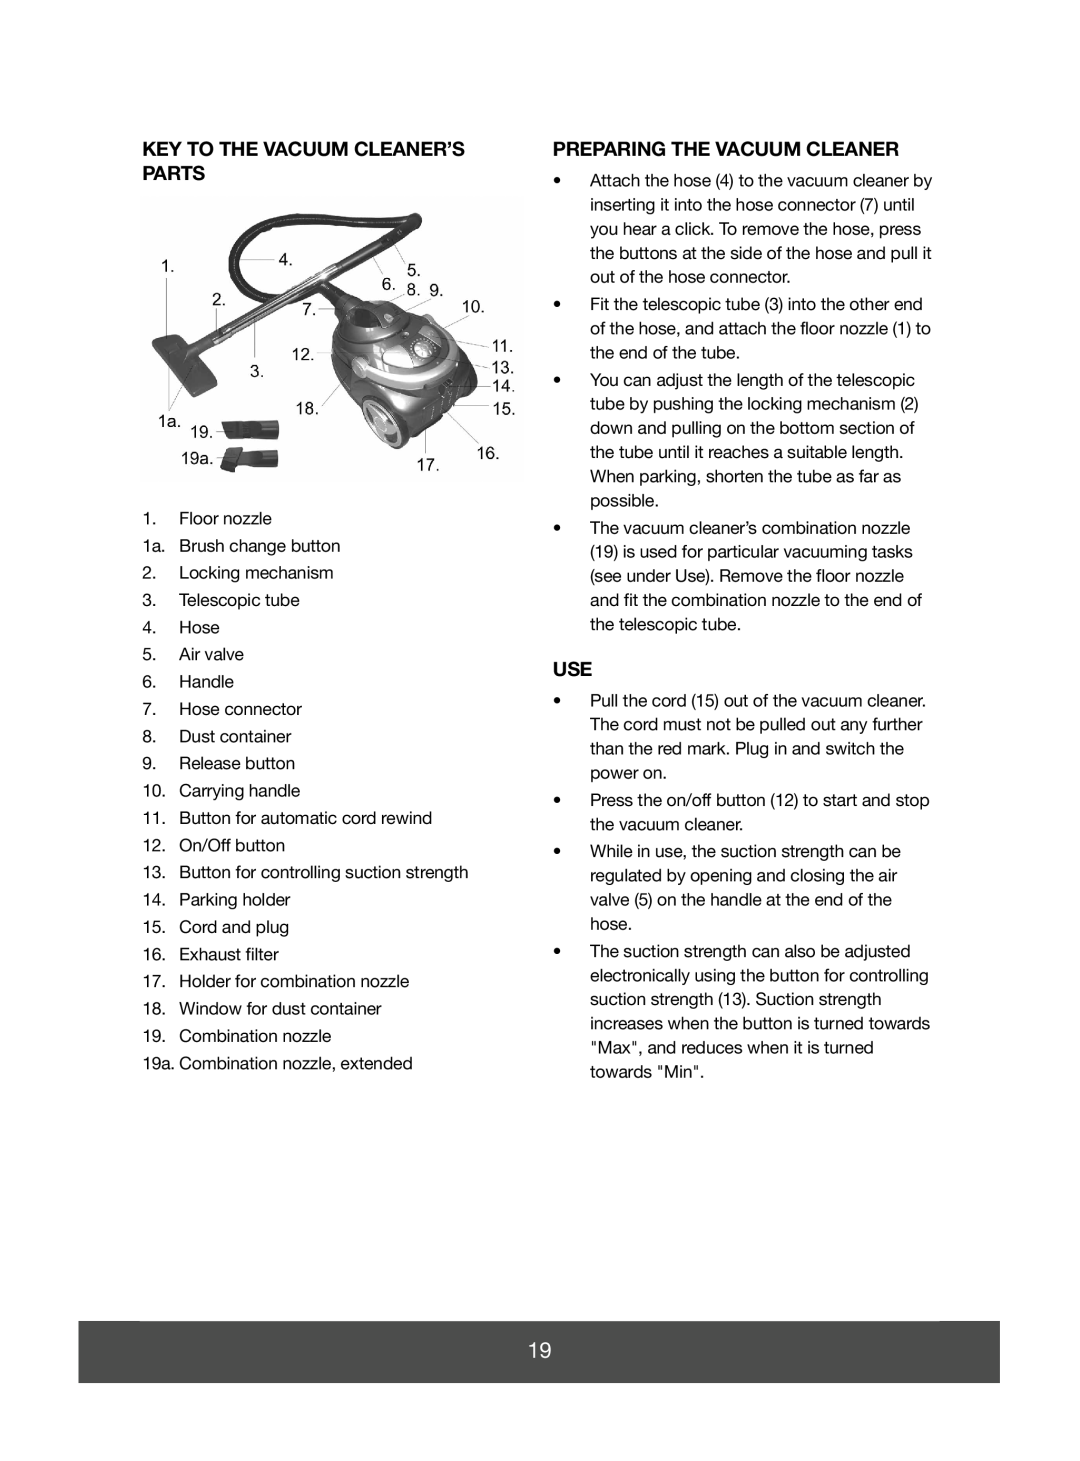 Melissa 640-046 manual Key To The Vacuum Cleaner’S Parts, Preparing The Vacuum Cleaner 